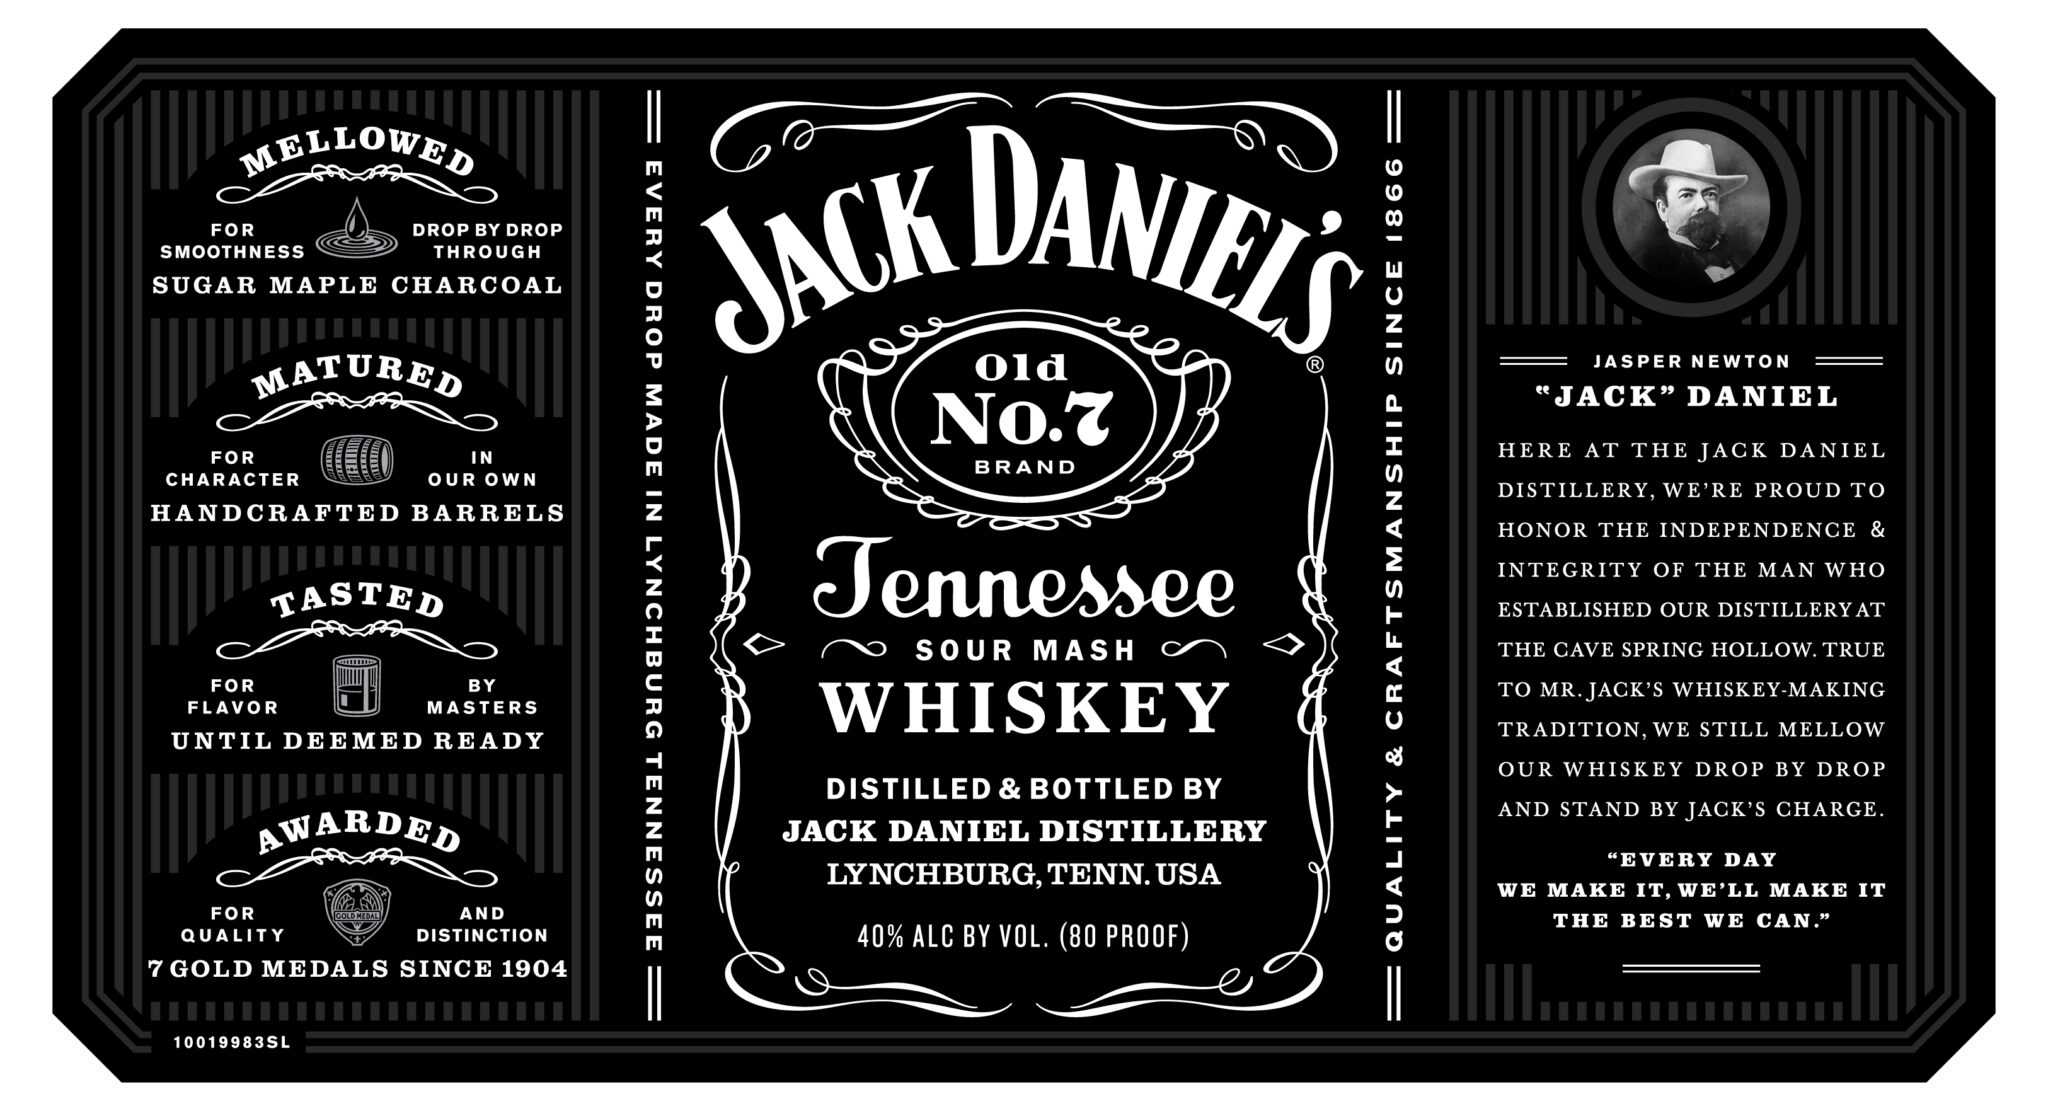 Jack Daniels Label Template